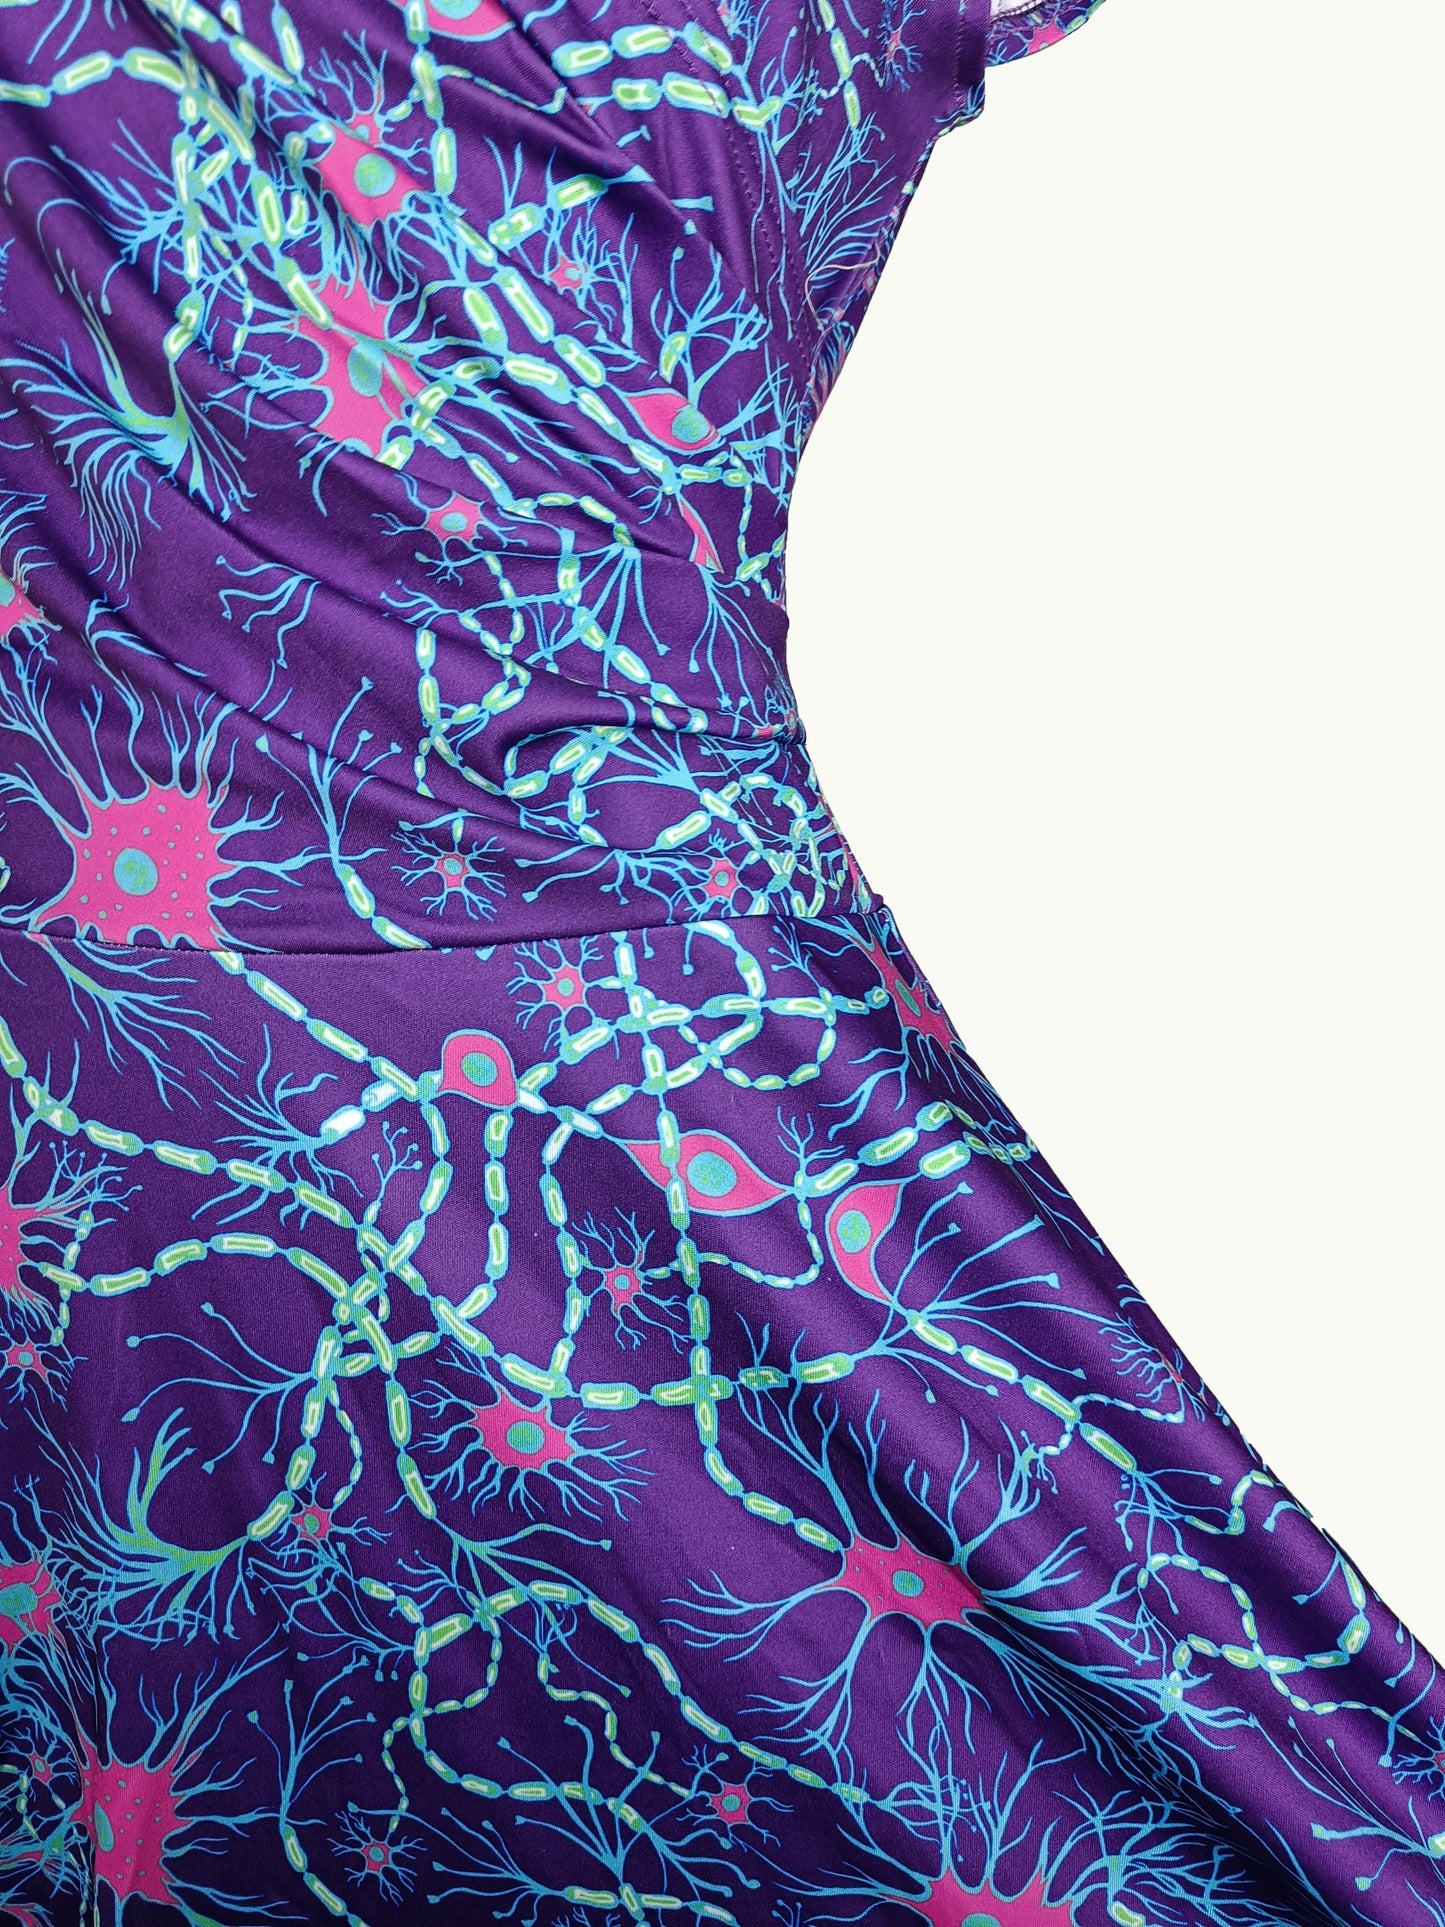 Bespoke Neurons Wrap Dress